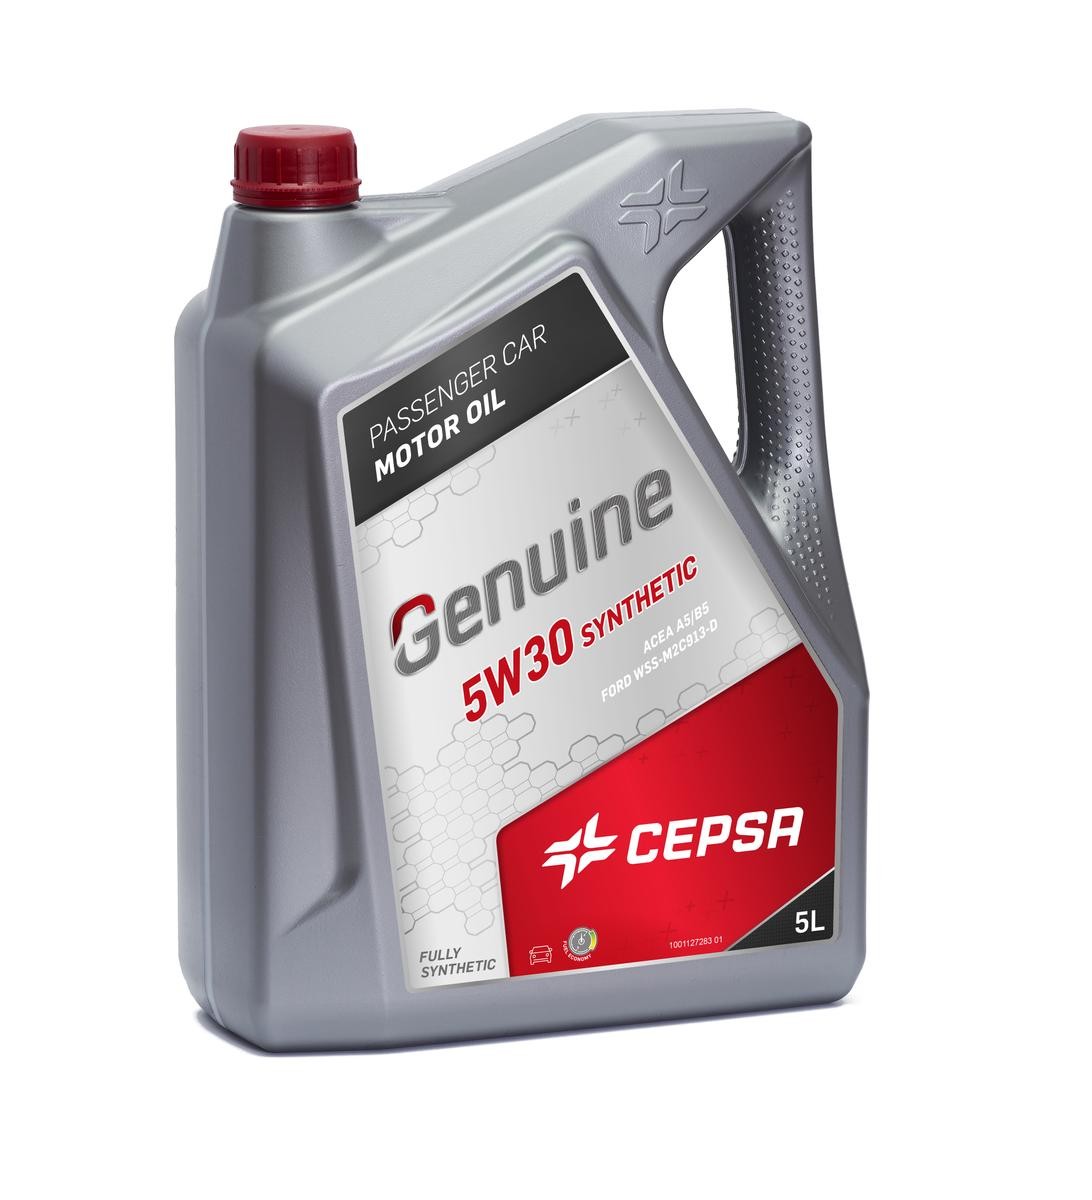 Buy Car oil CEPSA diesel 512563090 GENUINE, SYNTHETIC 5W-30, 5l, Synthetic, Full Synthetic Oil